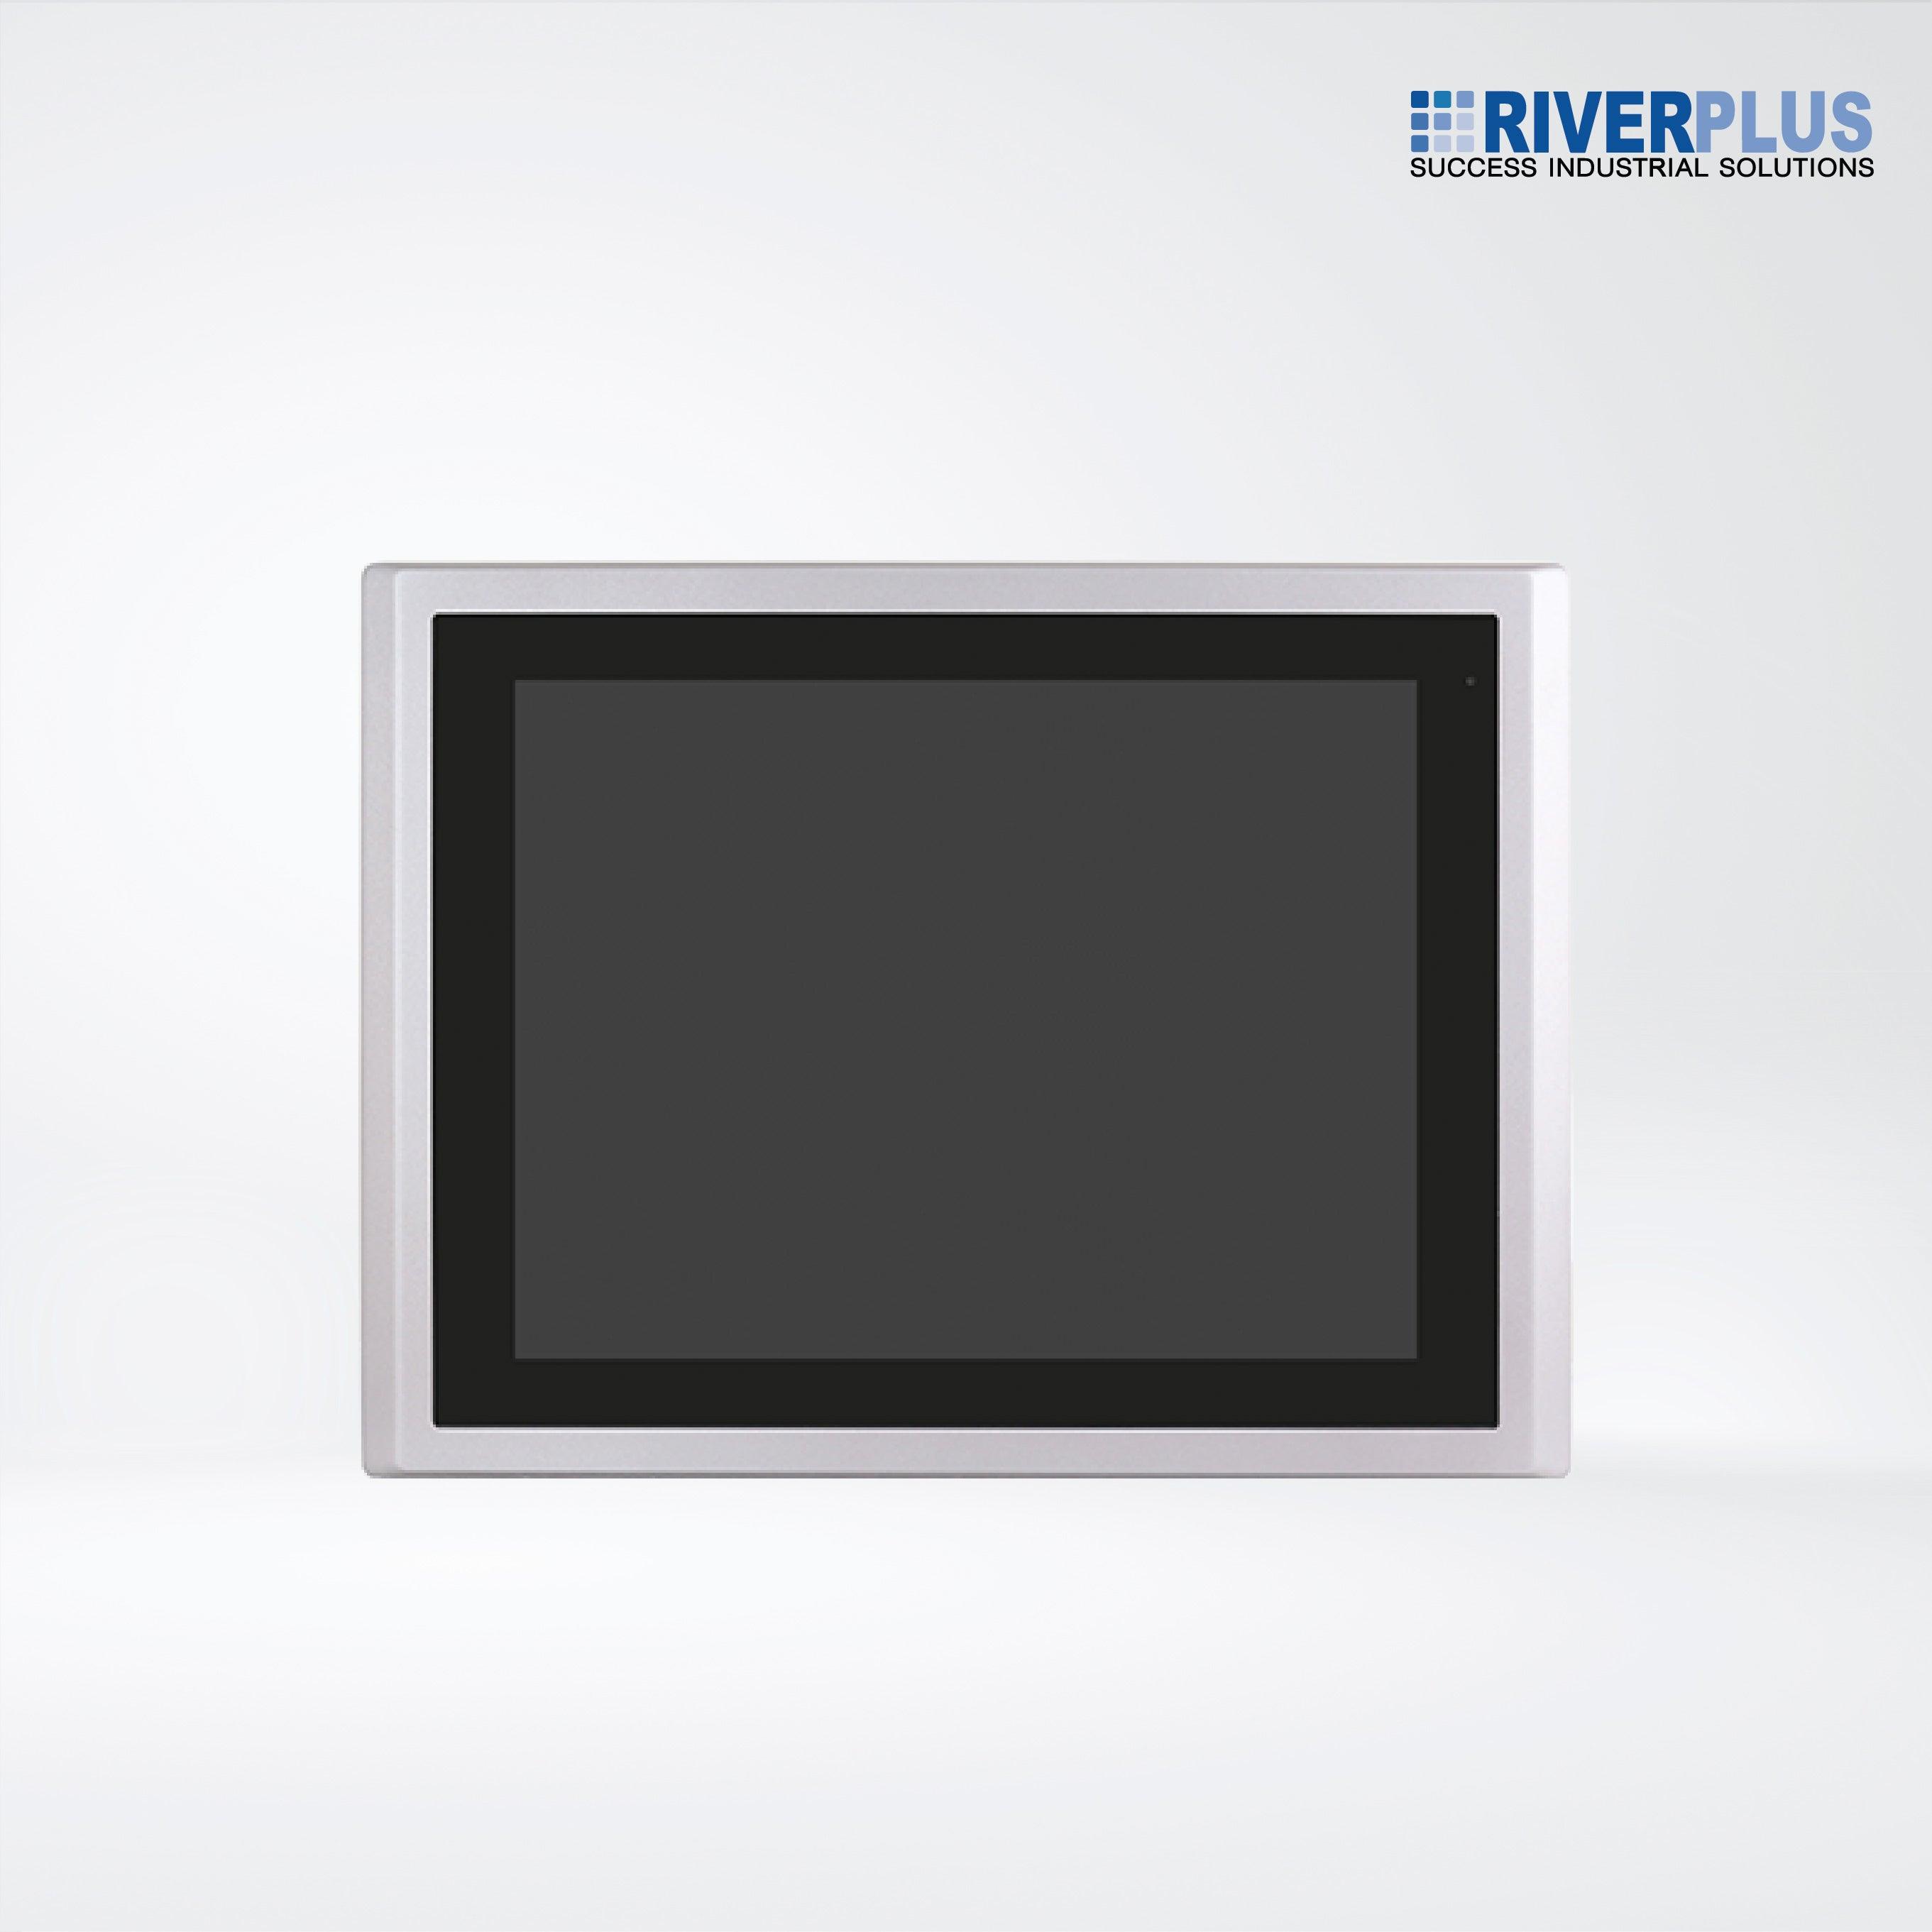 ViPAC-915RH 15” Intel 6th/7th Core i3/i5/i7 Panel PC - Riverplus